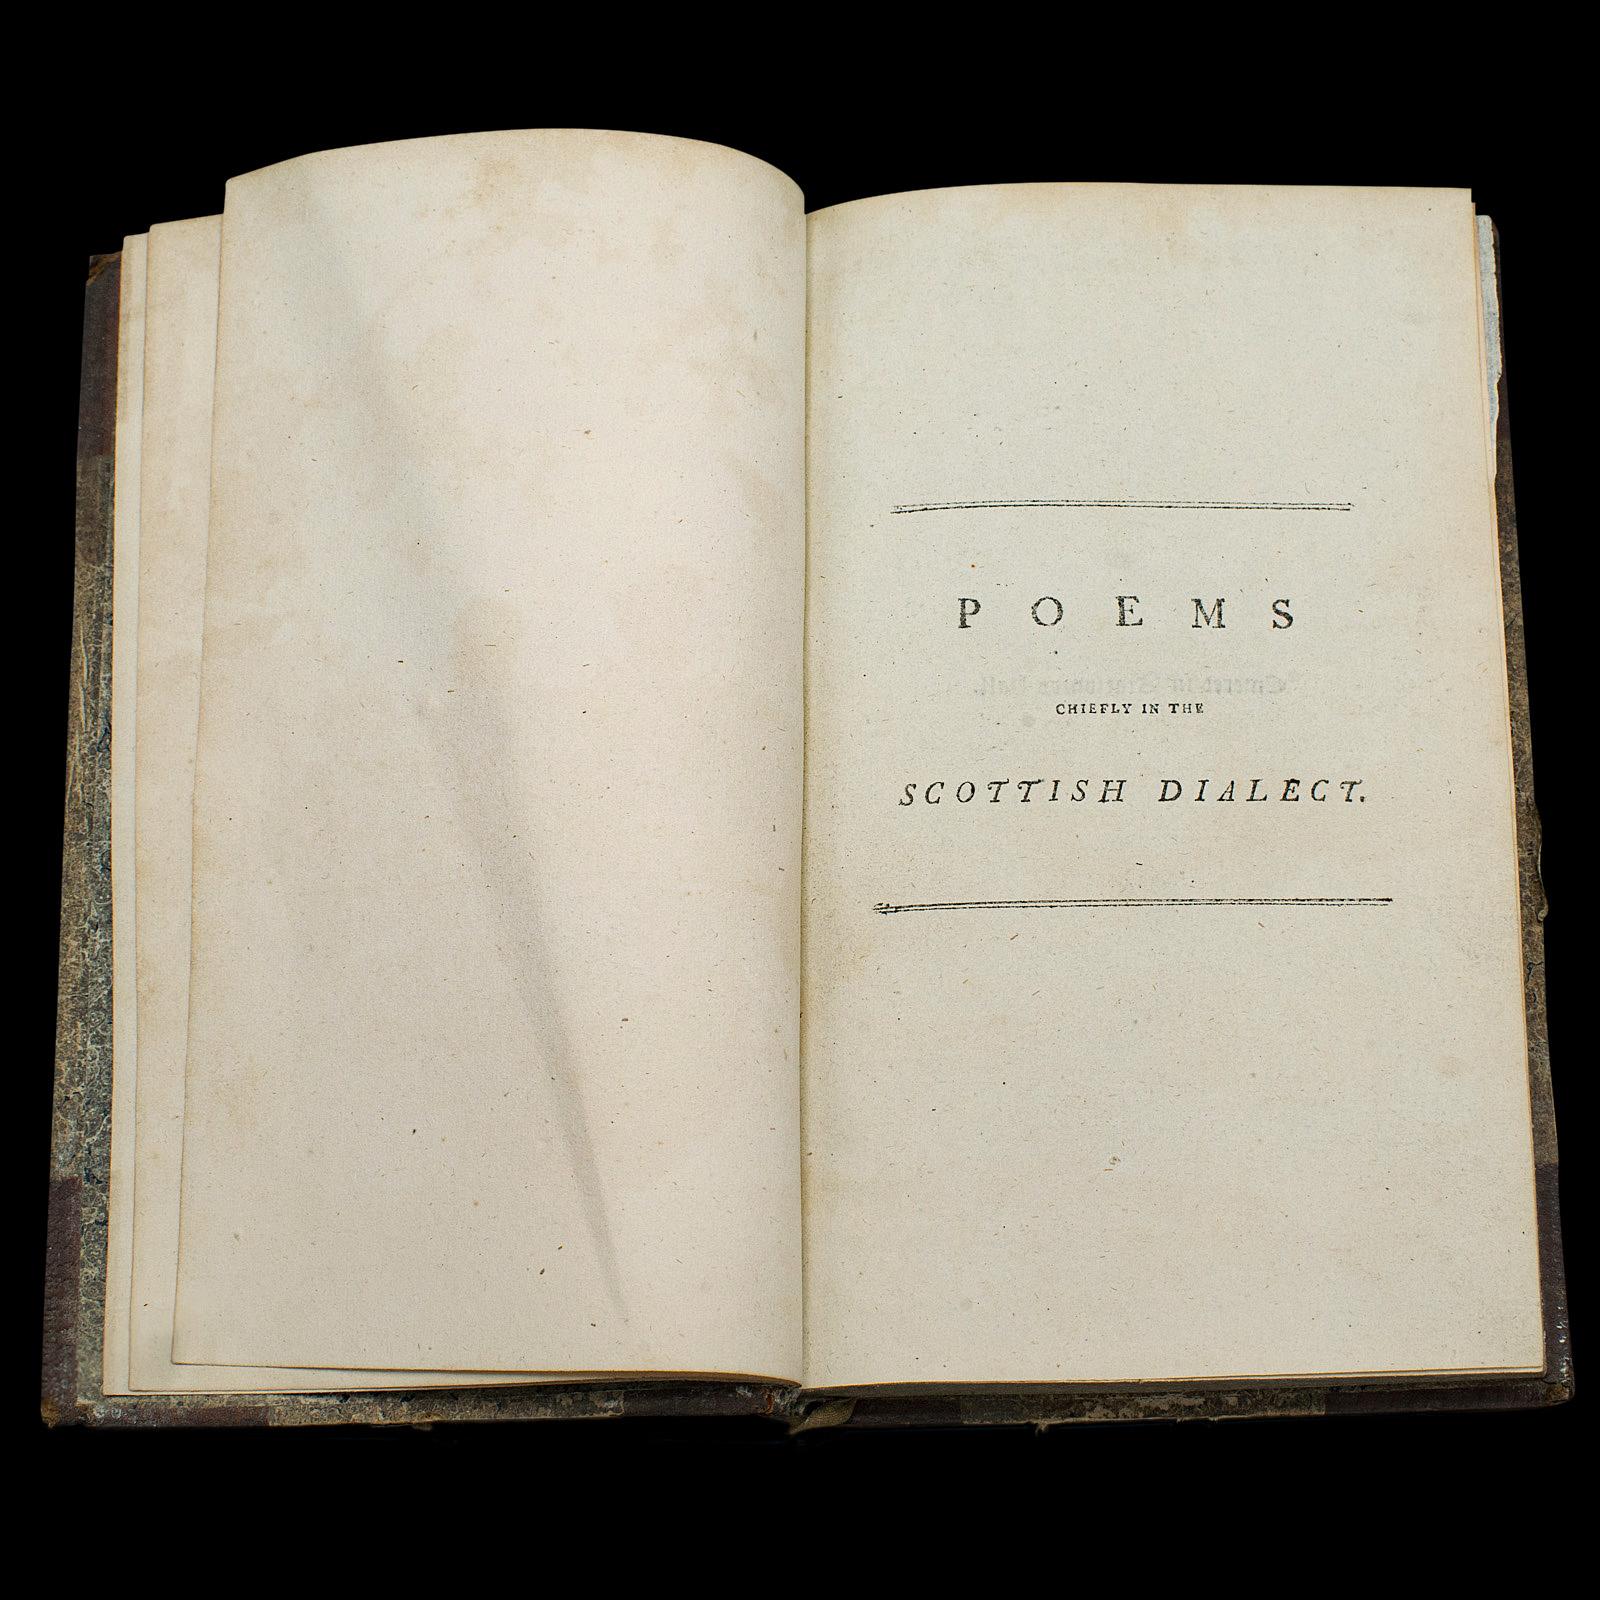 British Book of Antique Poems by Robert Burns, Scottish Dialect English, Georgian, 1813